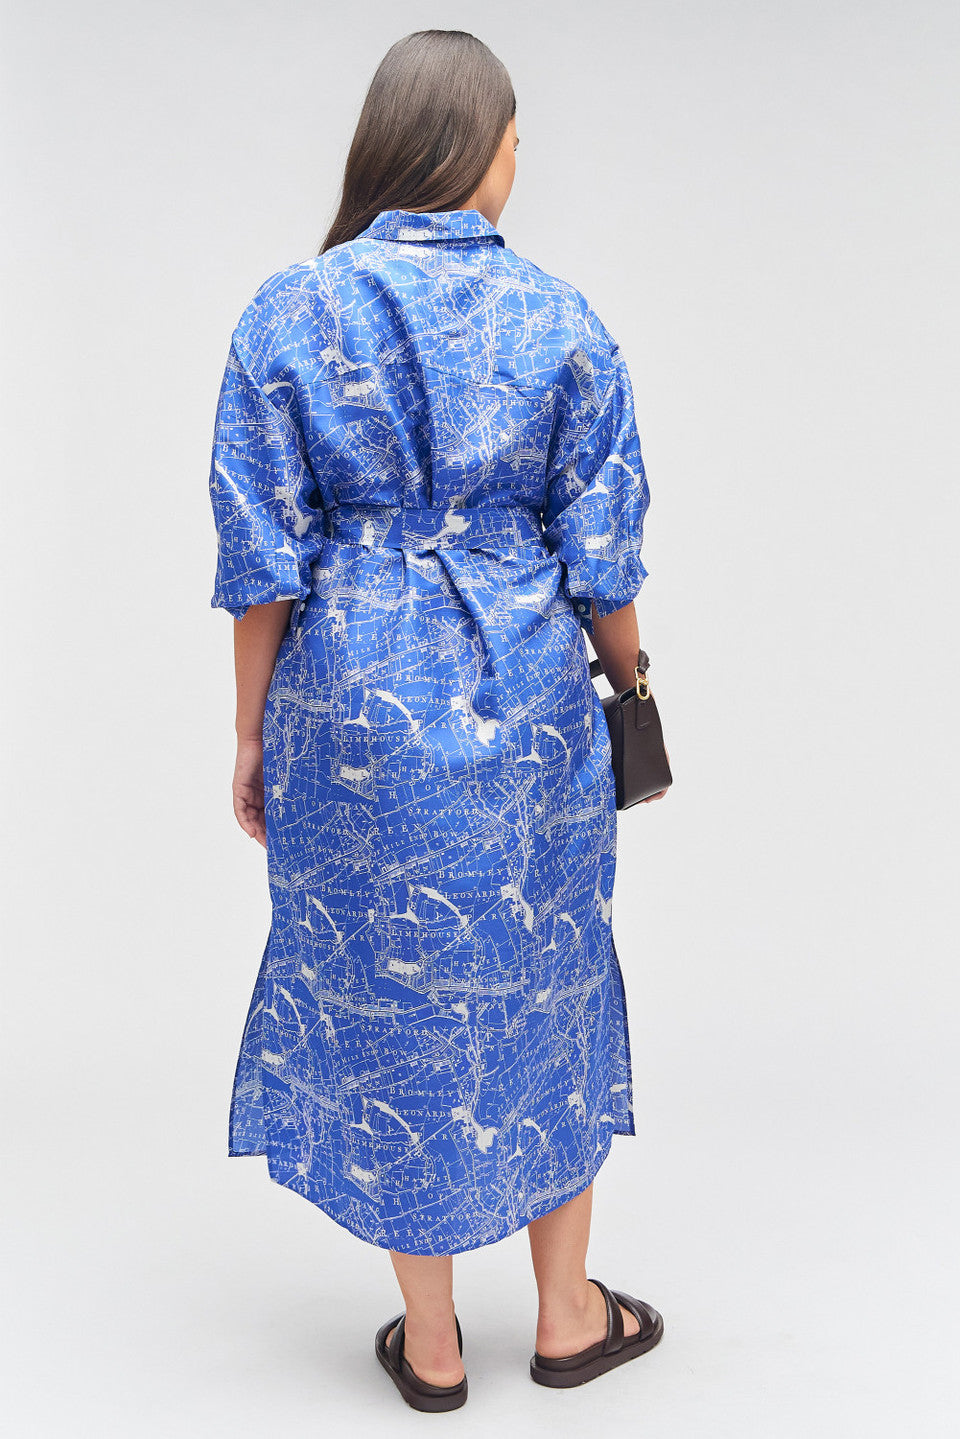 OROTON - MAP PRINT SHIRT DRESS - BLUE